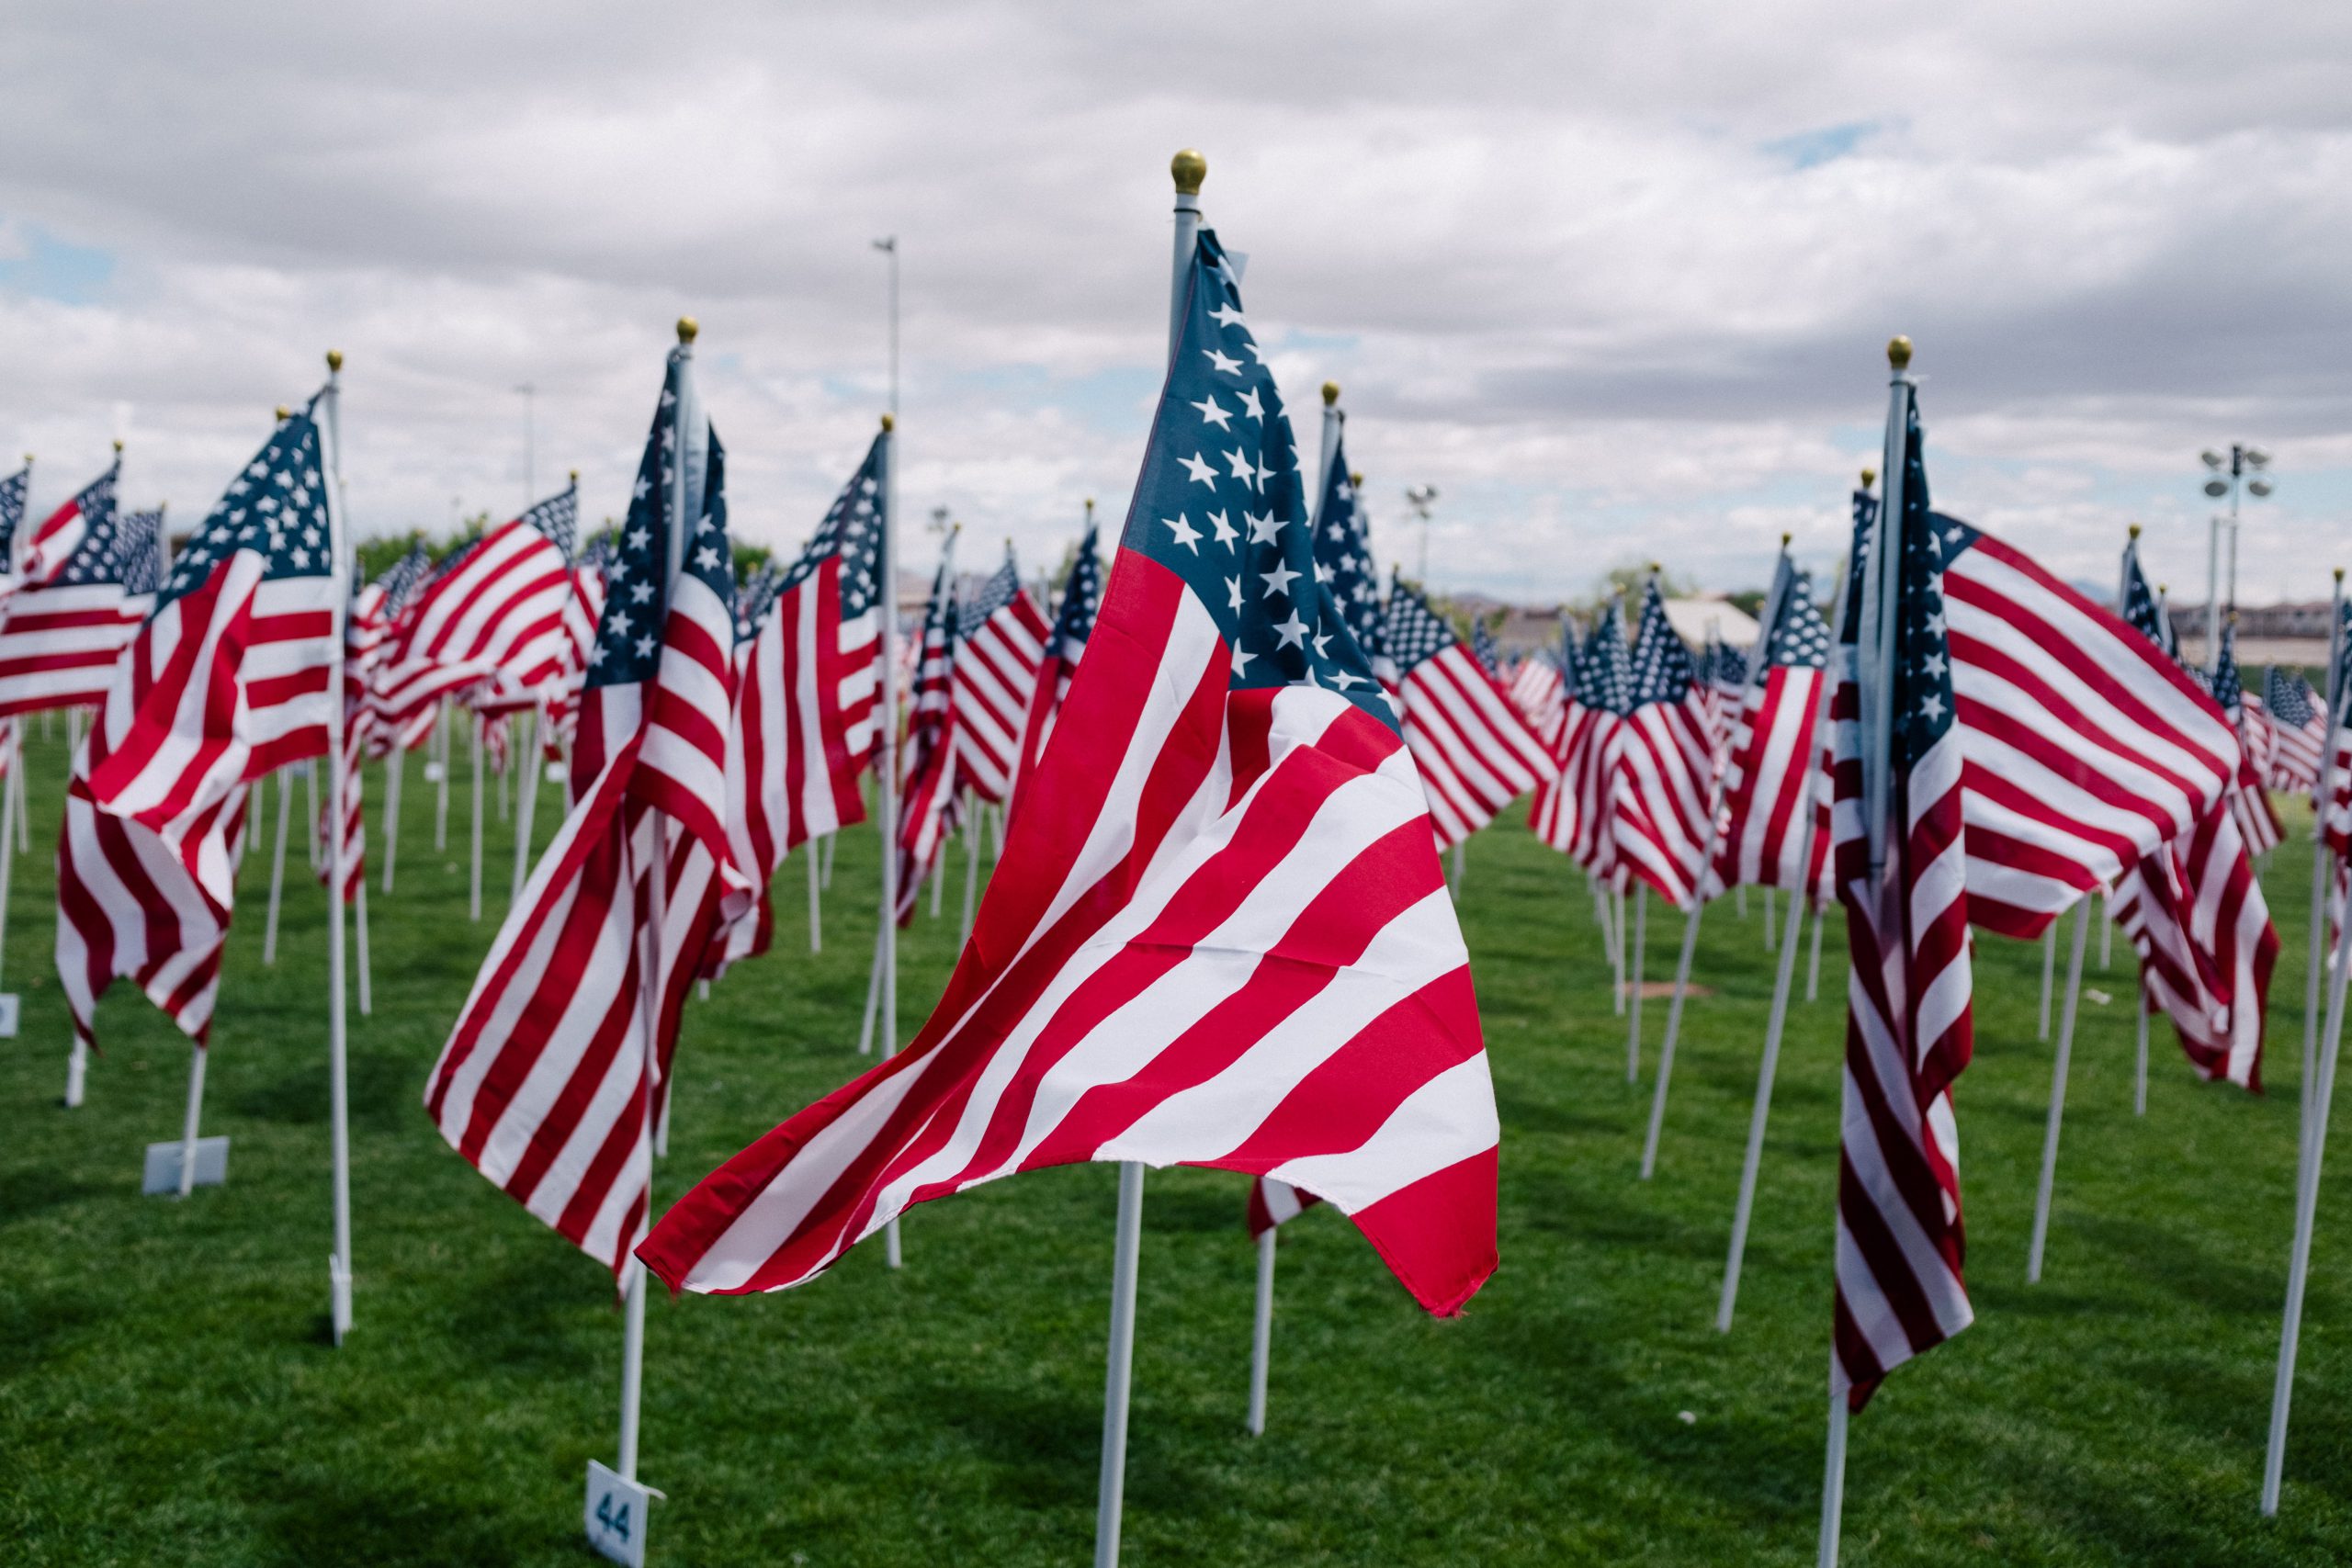 IMage of flags memorializing those fallen in war